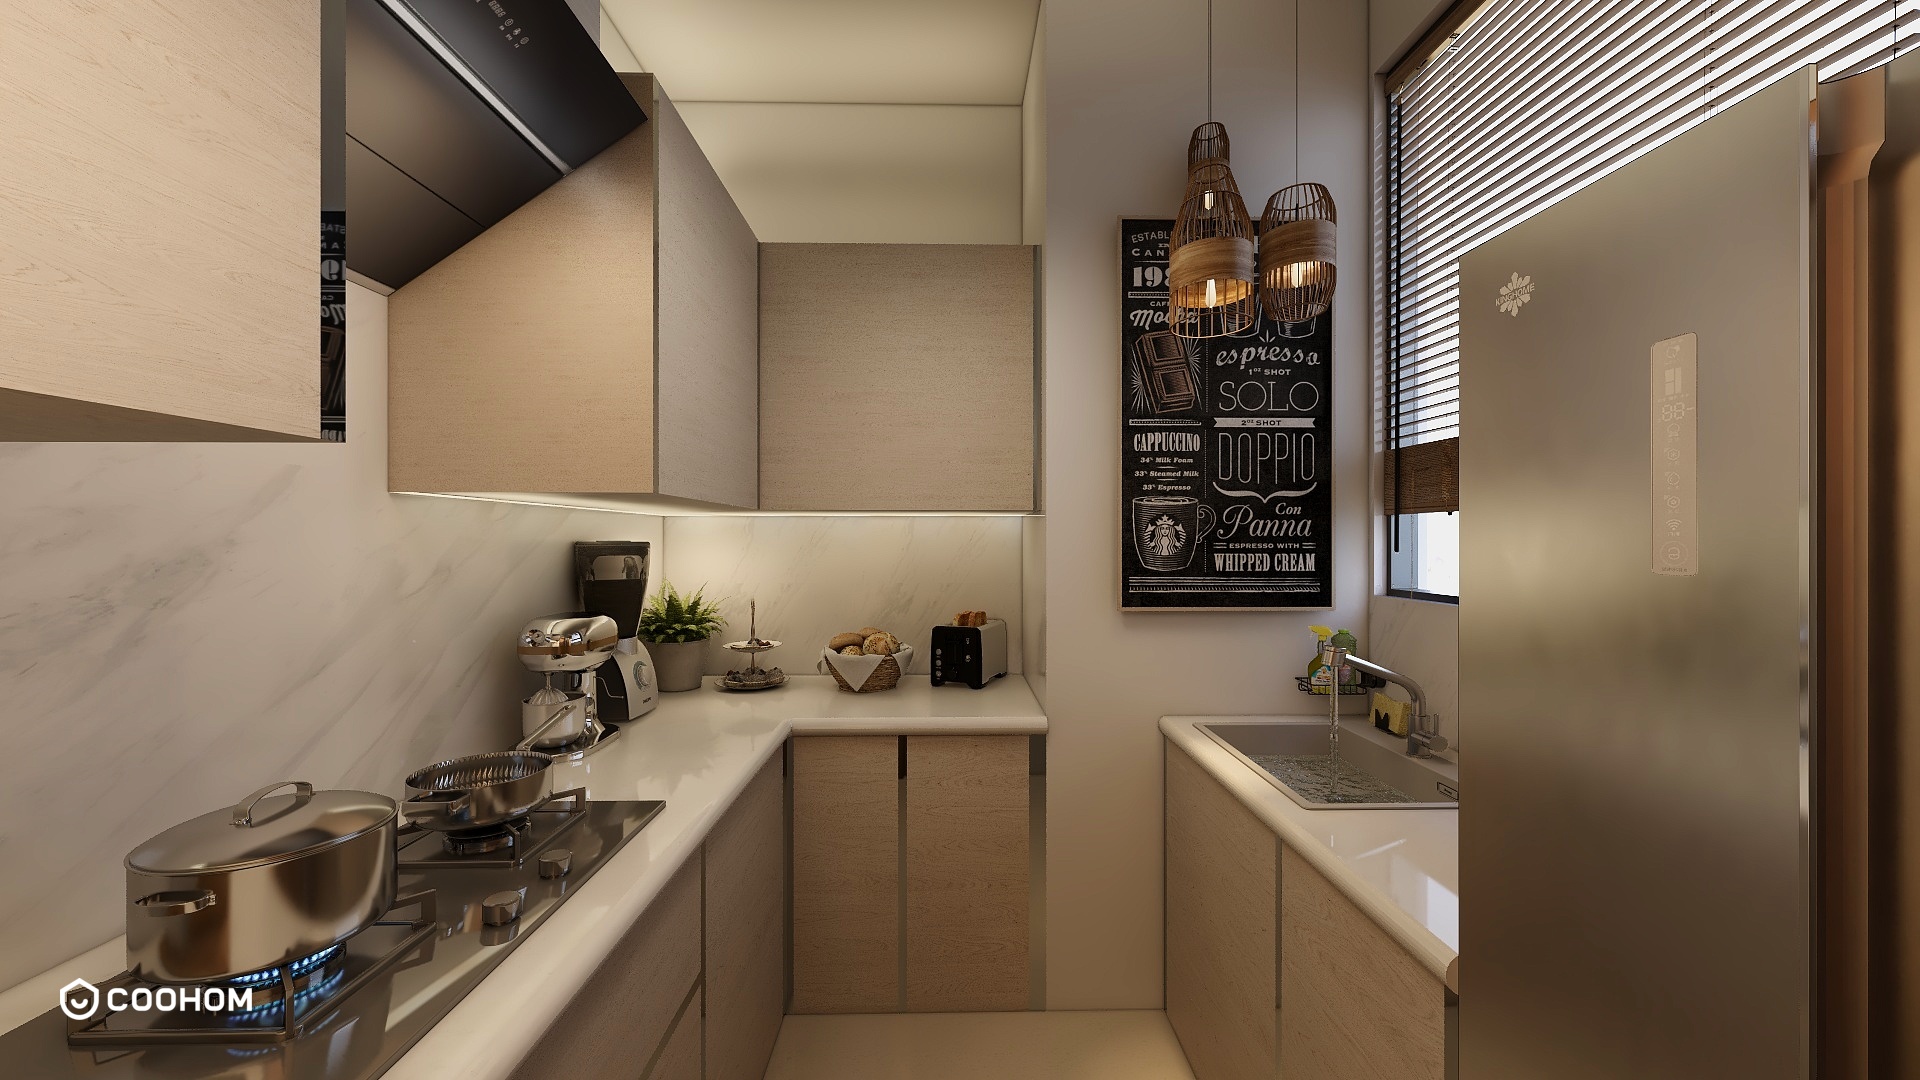 NoormArcInterioR的装修设计方案:Modern Small Kitchen Apartment